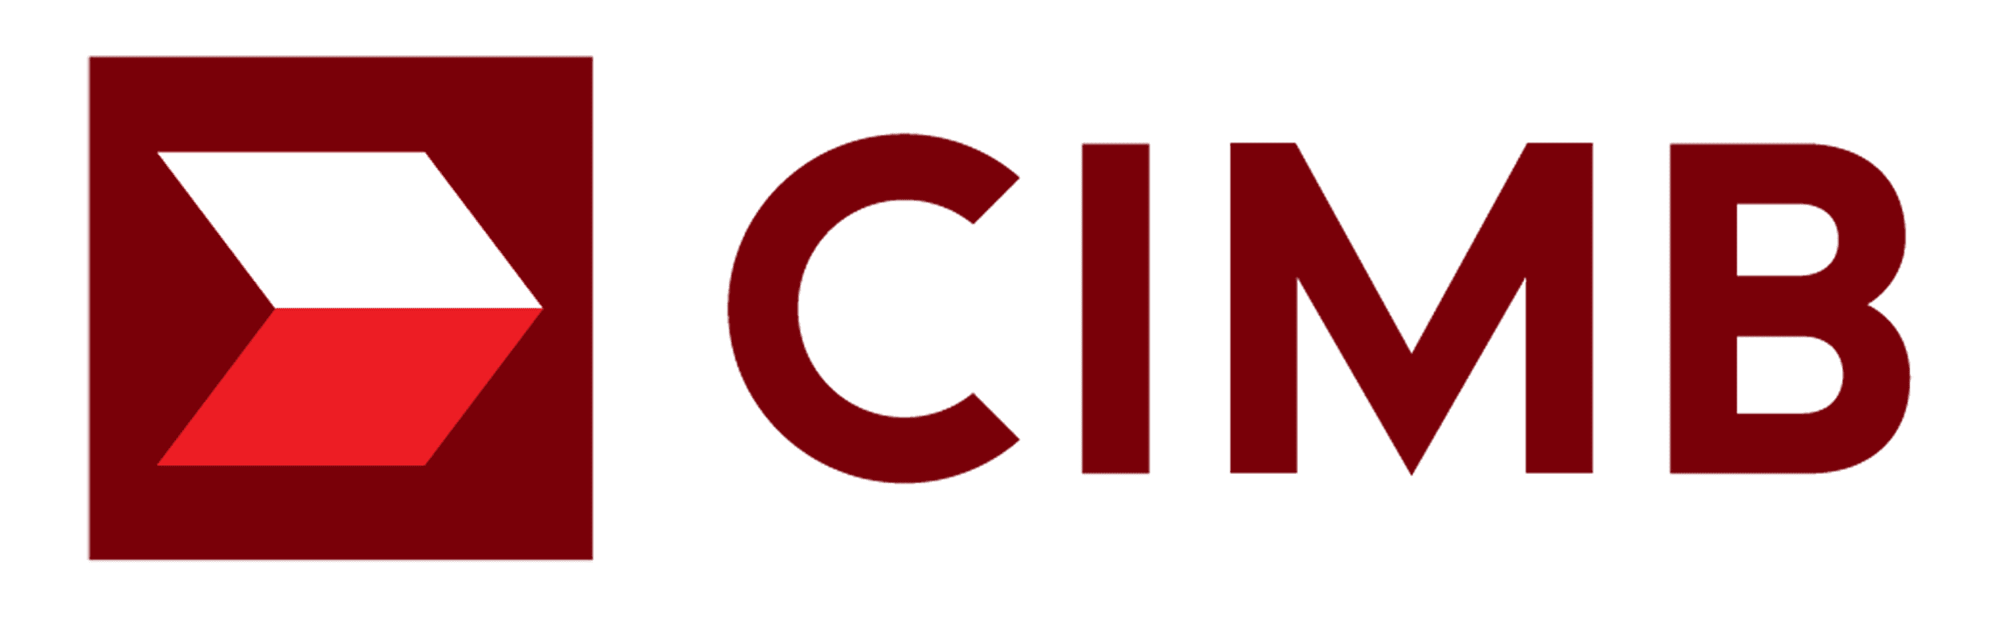 CIMB-Logo-1